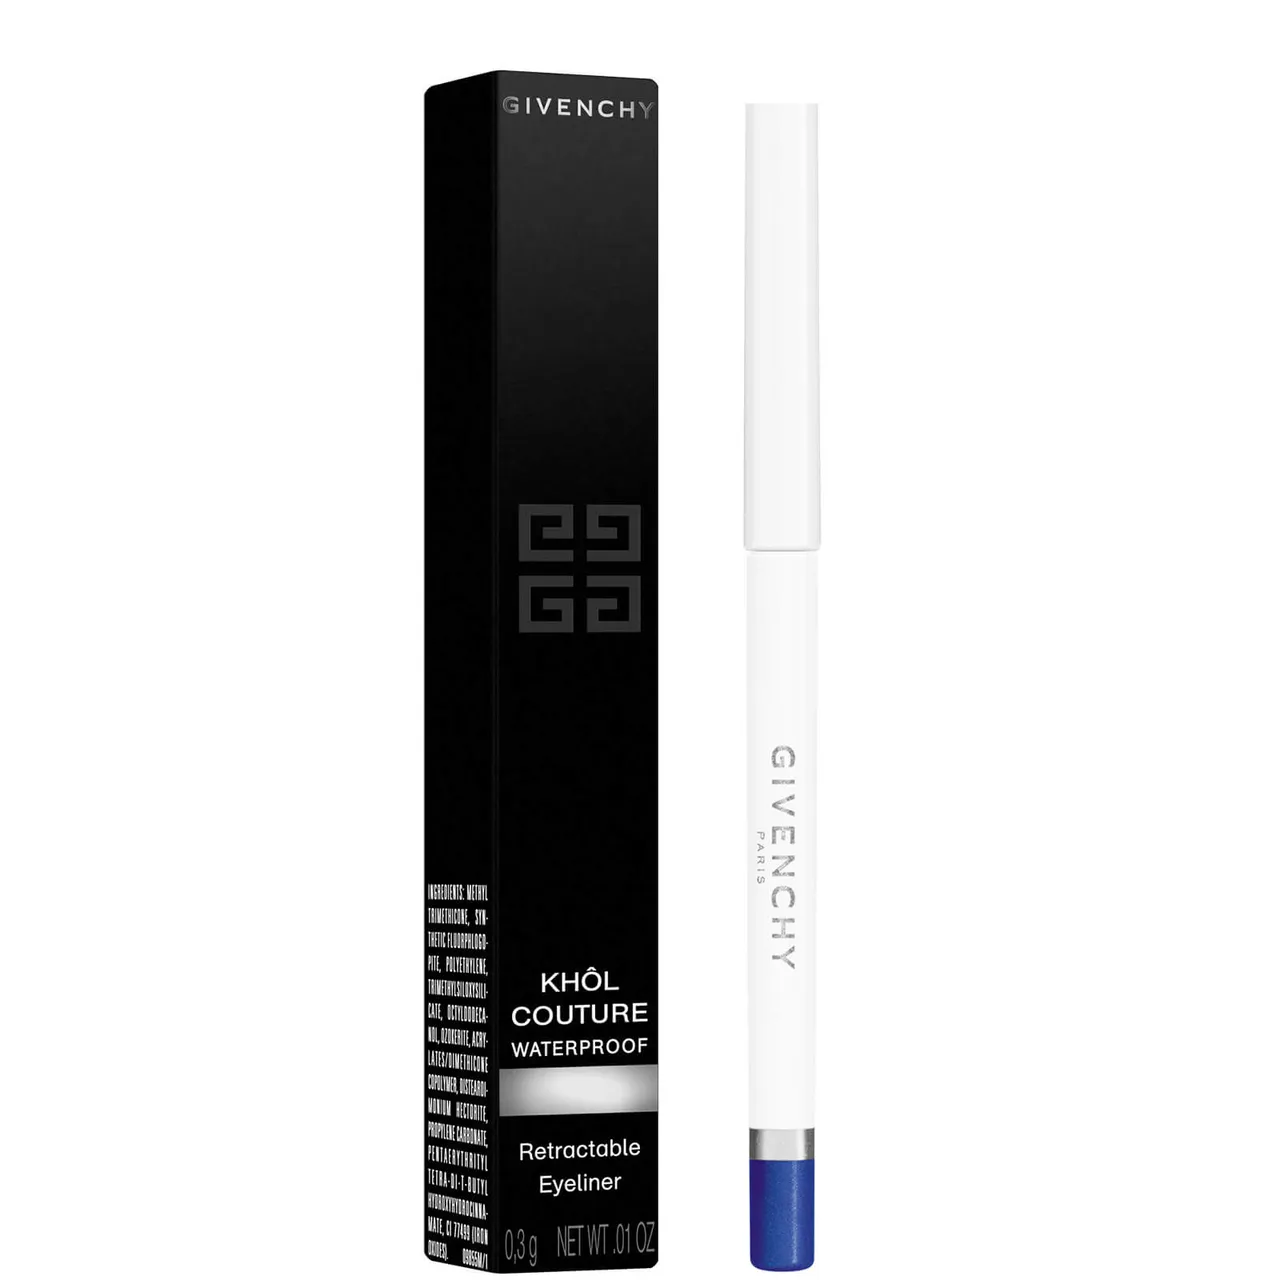 Givenchy Khol Couture Waterproof Eyeliner 10g (Various Shades) - Cobalt